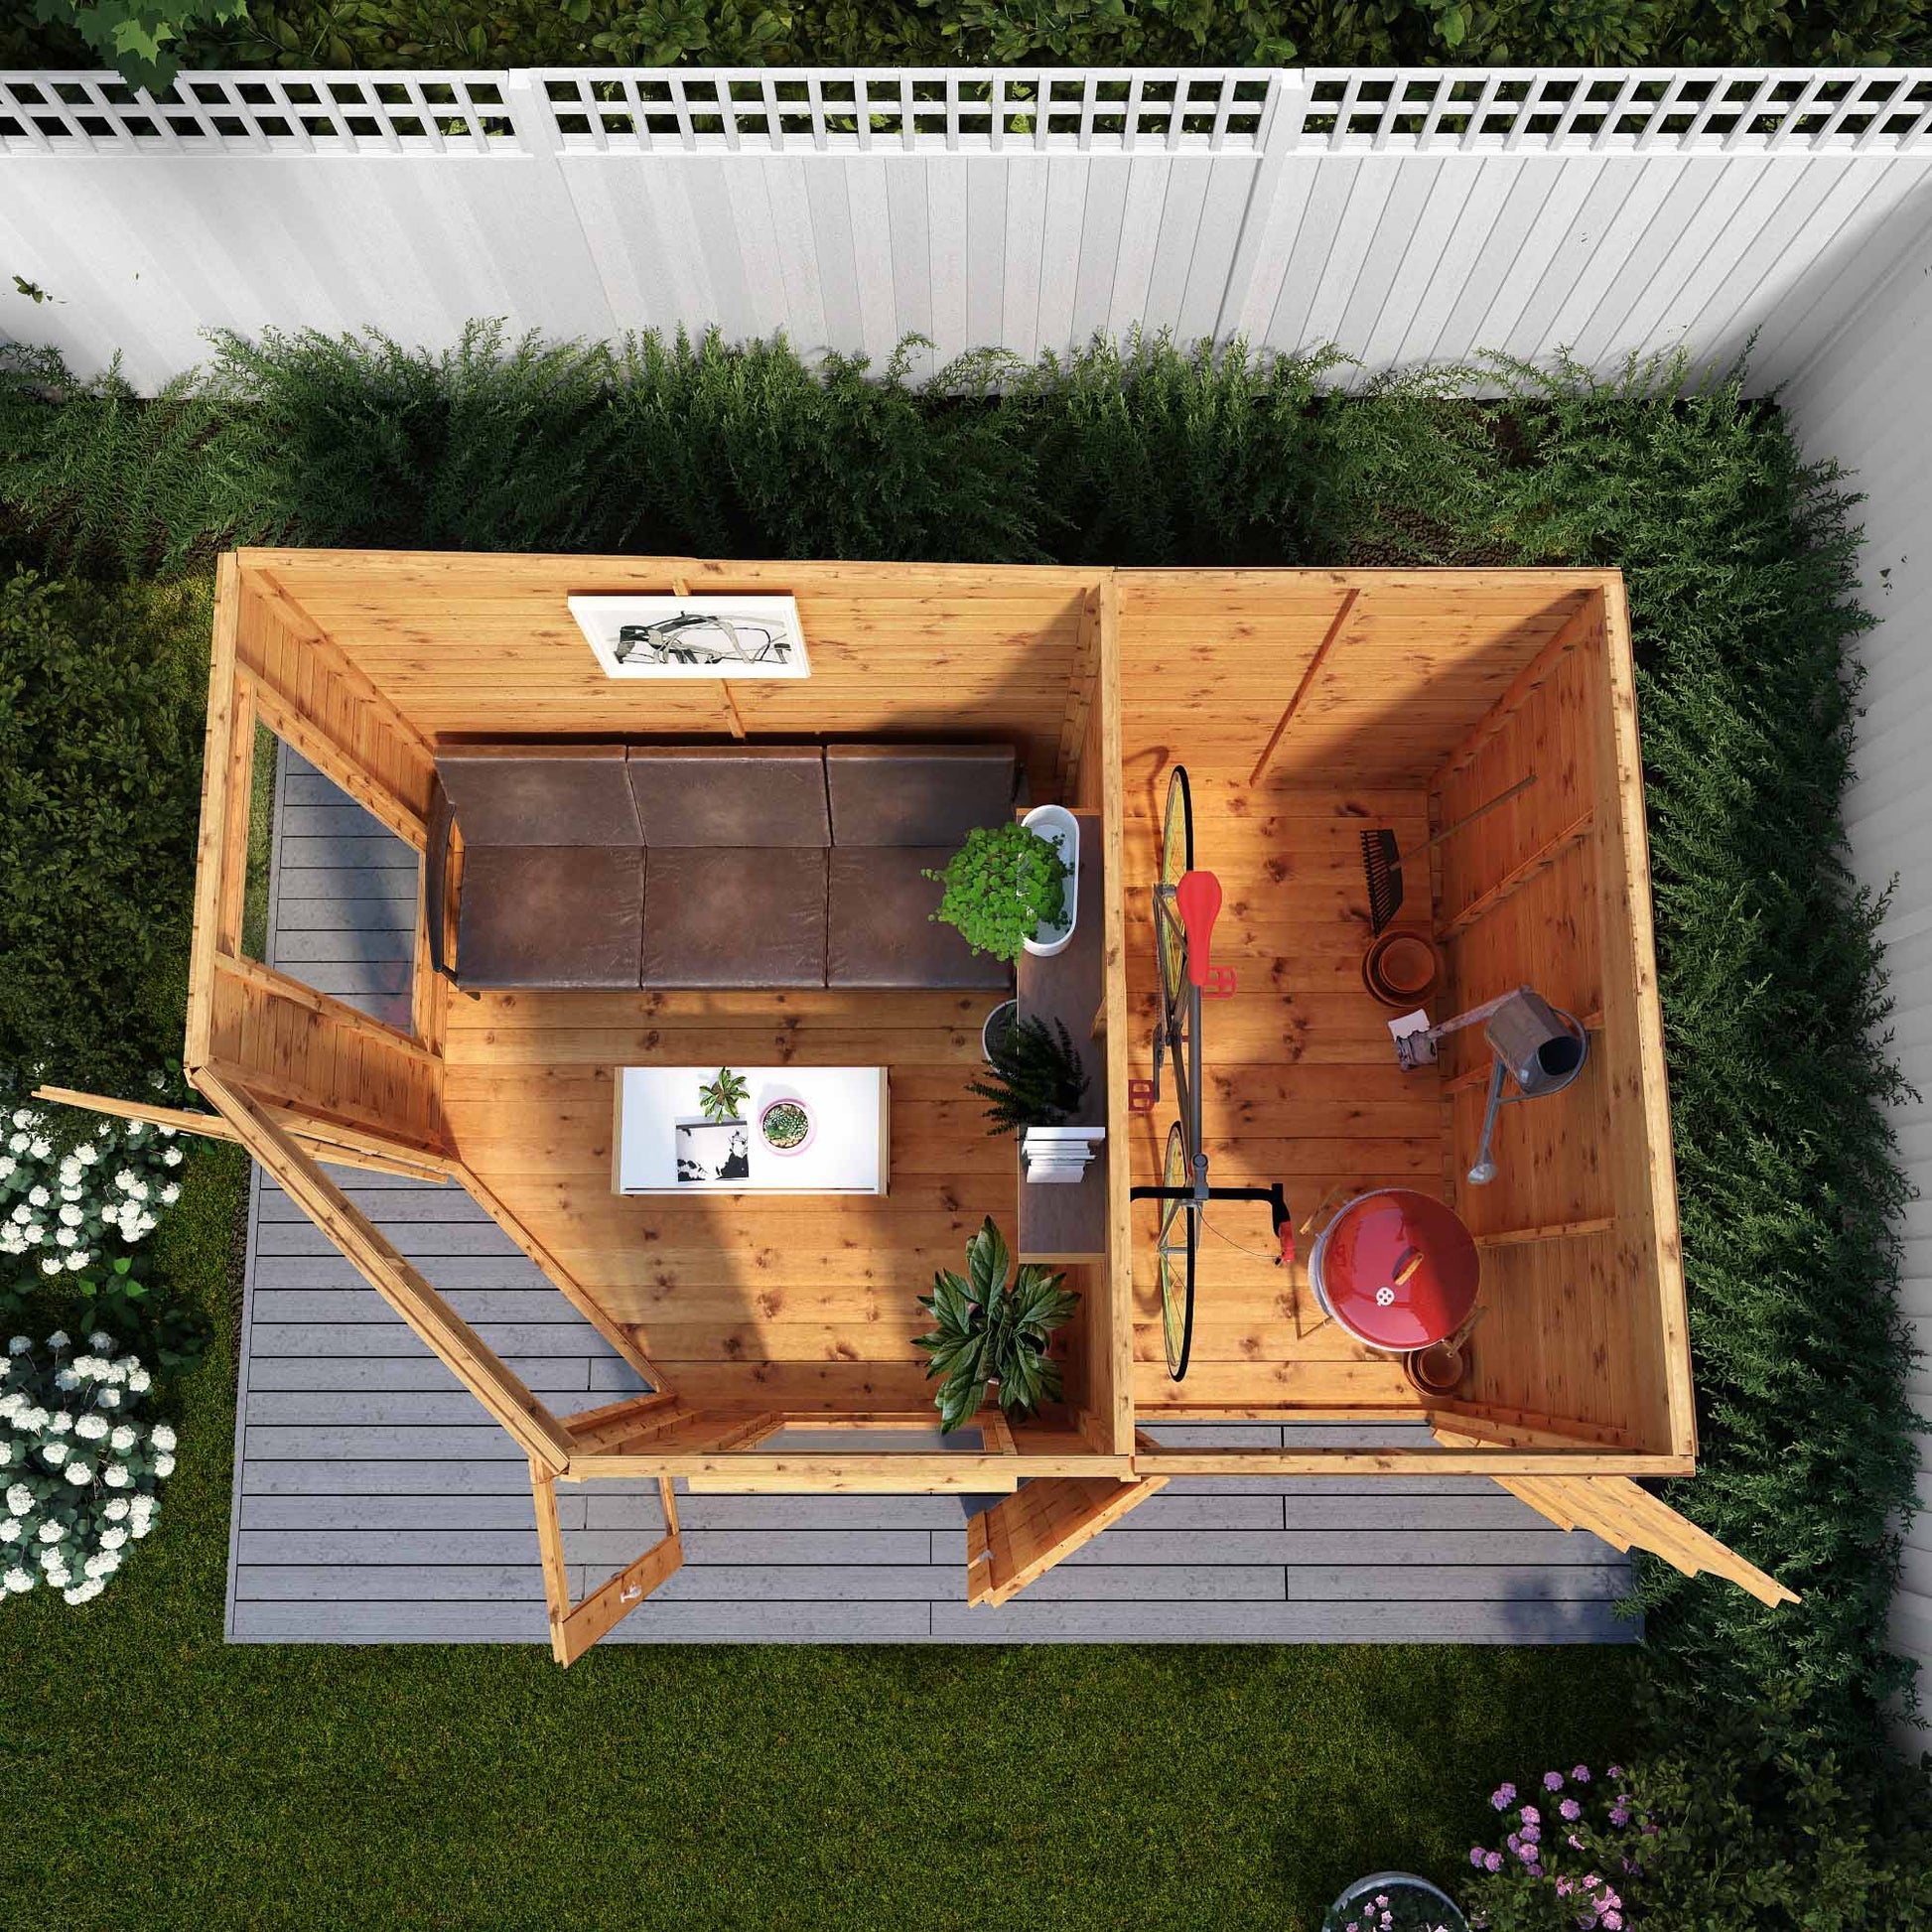 Mercia 7 x 11  Corner Summerhouse With Side Shed - Premium Garden